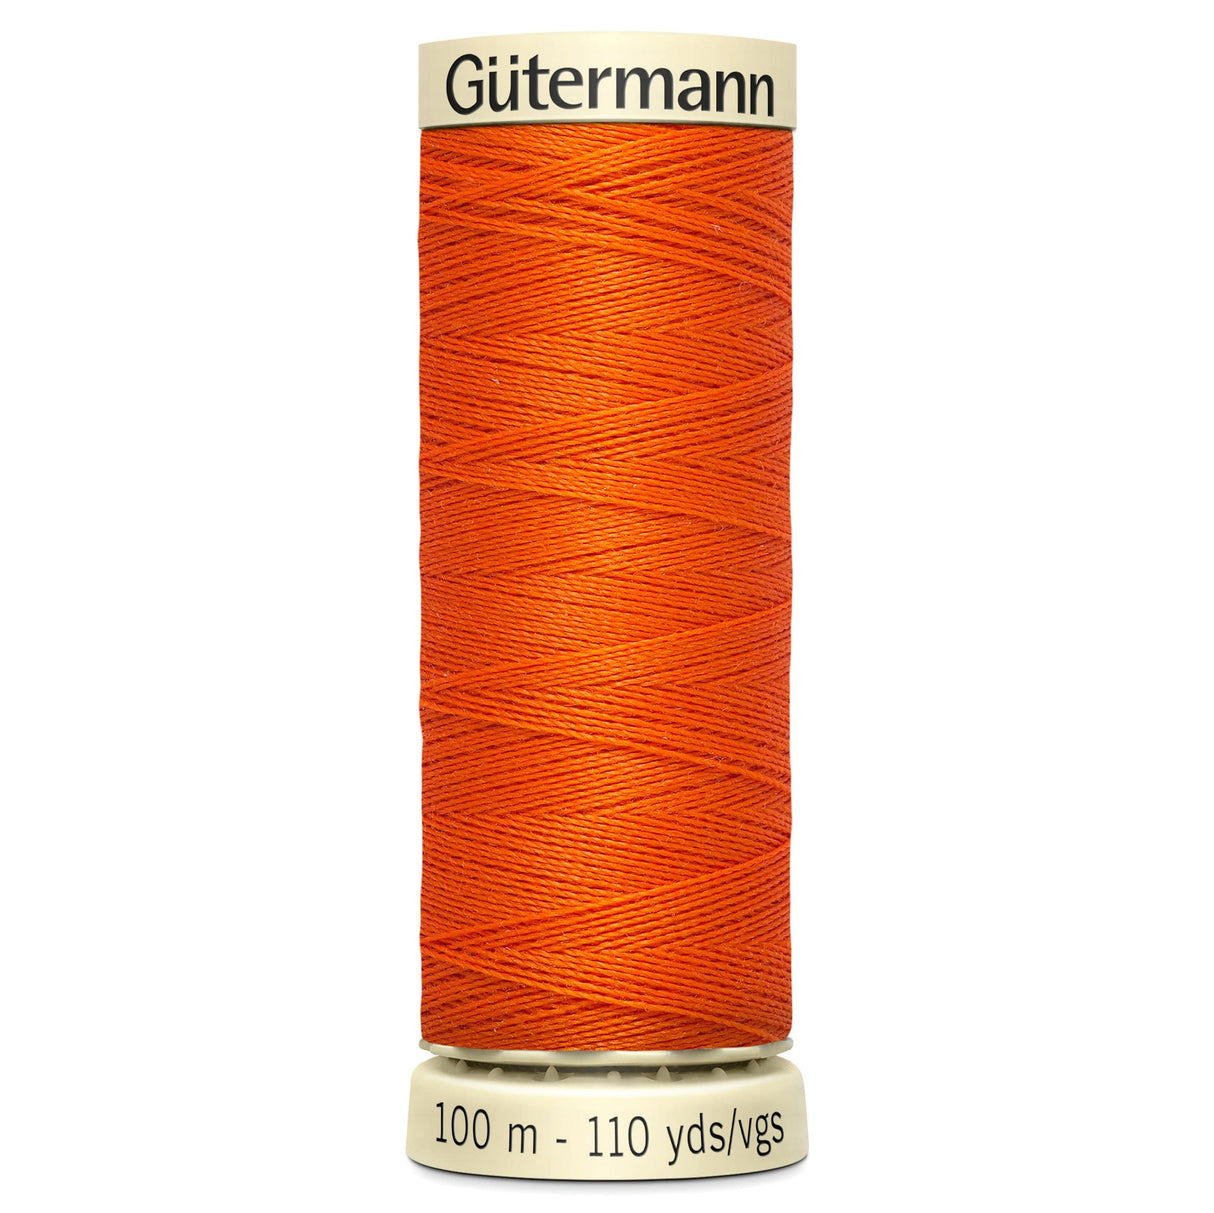 Groves Haberdashery 351 Gutermann Thread Sewing Cotton 100 m Black to Pink